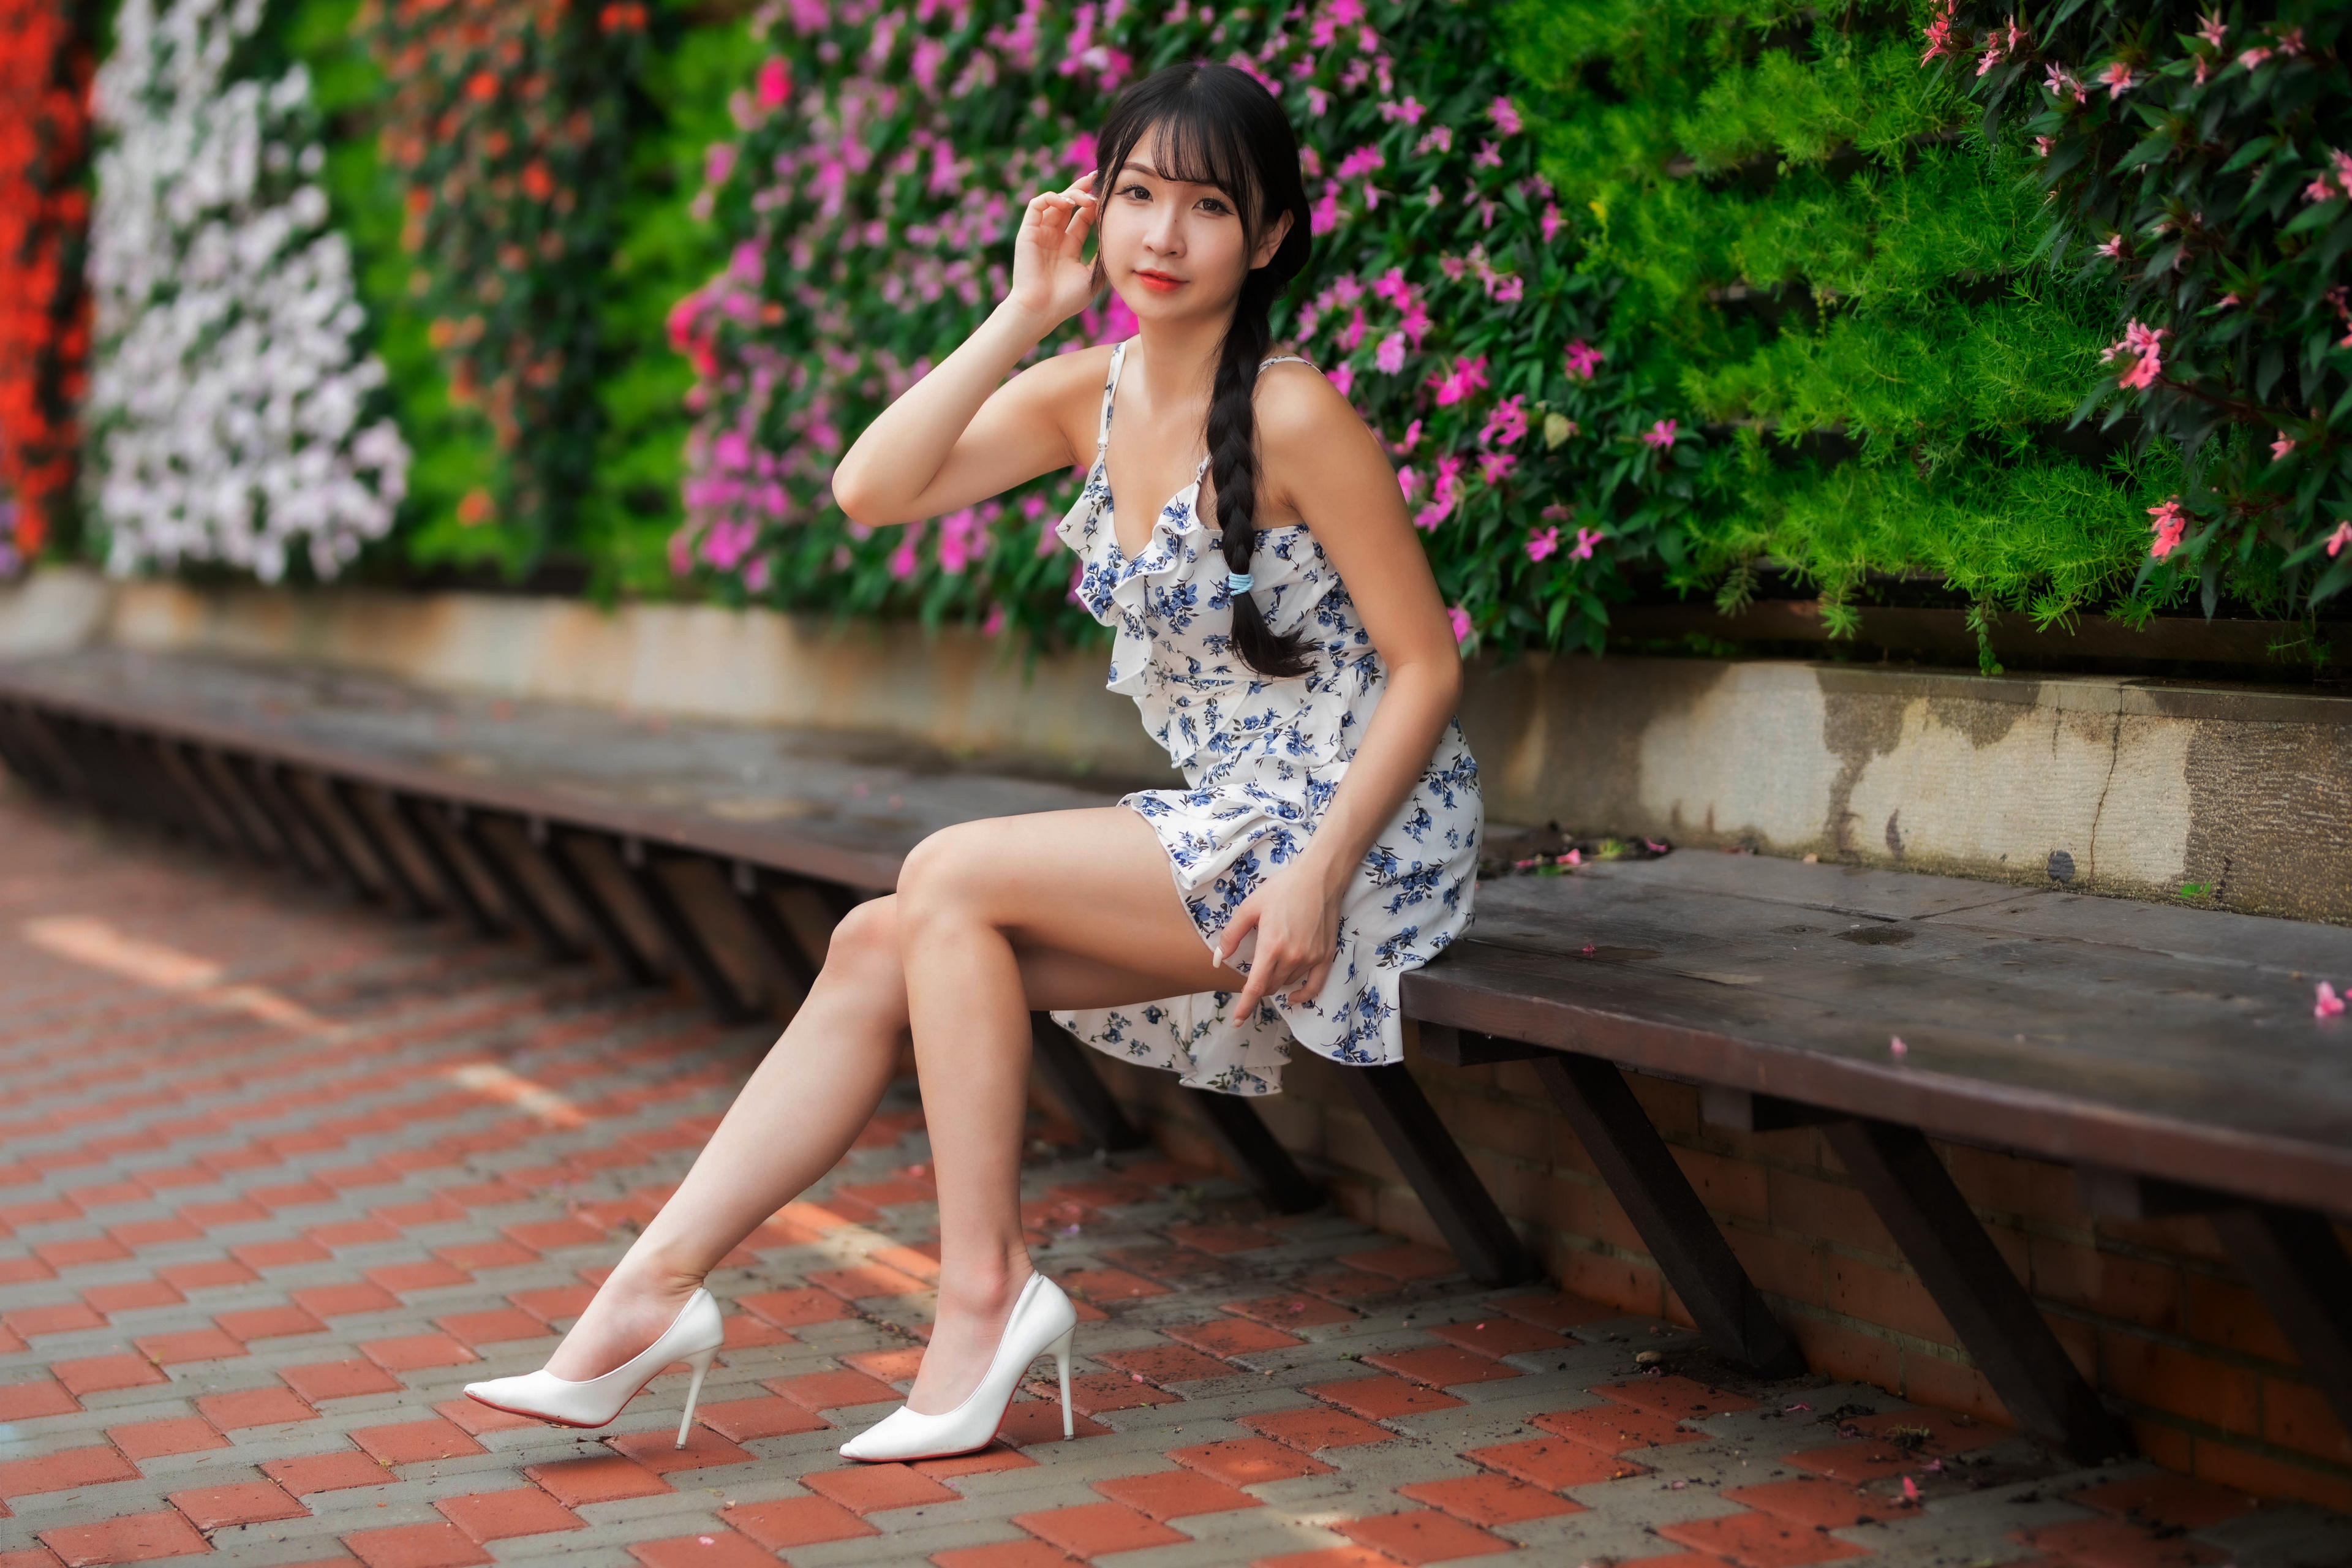 Asian Model Women Long Hair Dark Hair Sitting Bench High Heels 3840x2560